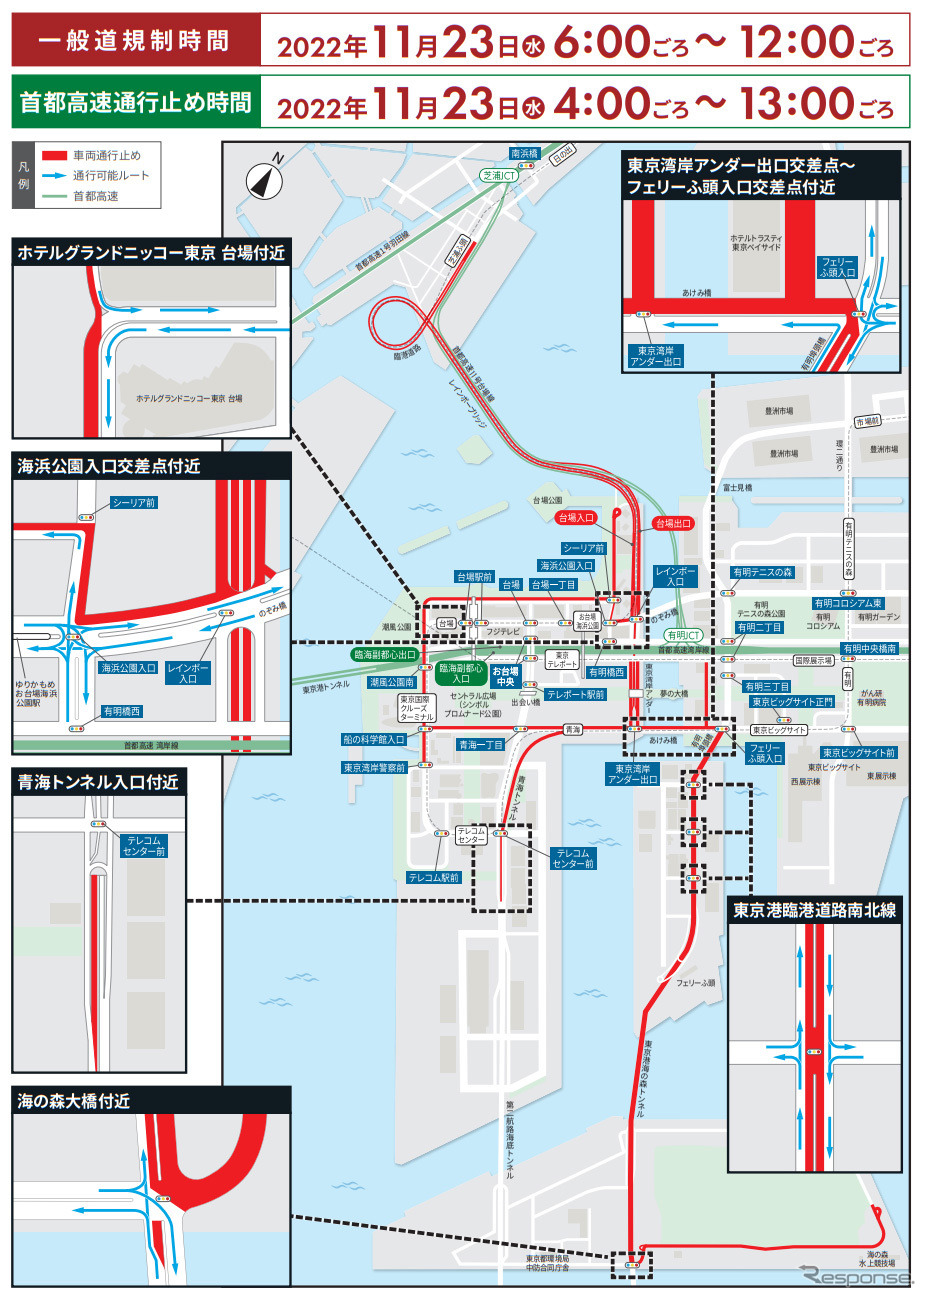 GRAND CYCLE TOKYO レインボーランド開催に伴う交通規制（お台場地区周辺詳細）《地図提供 警視庁》